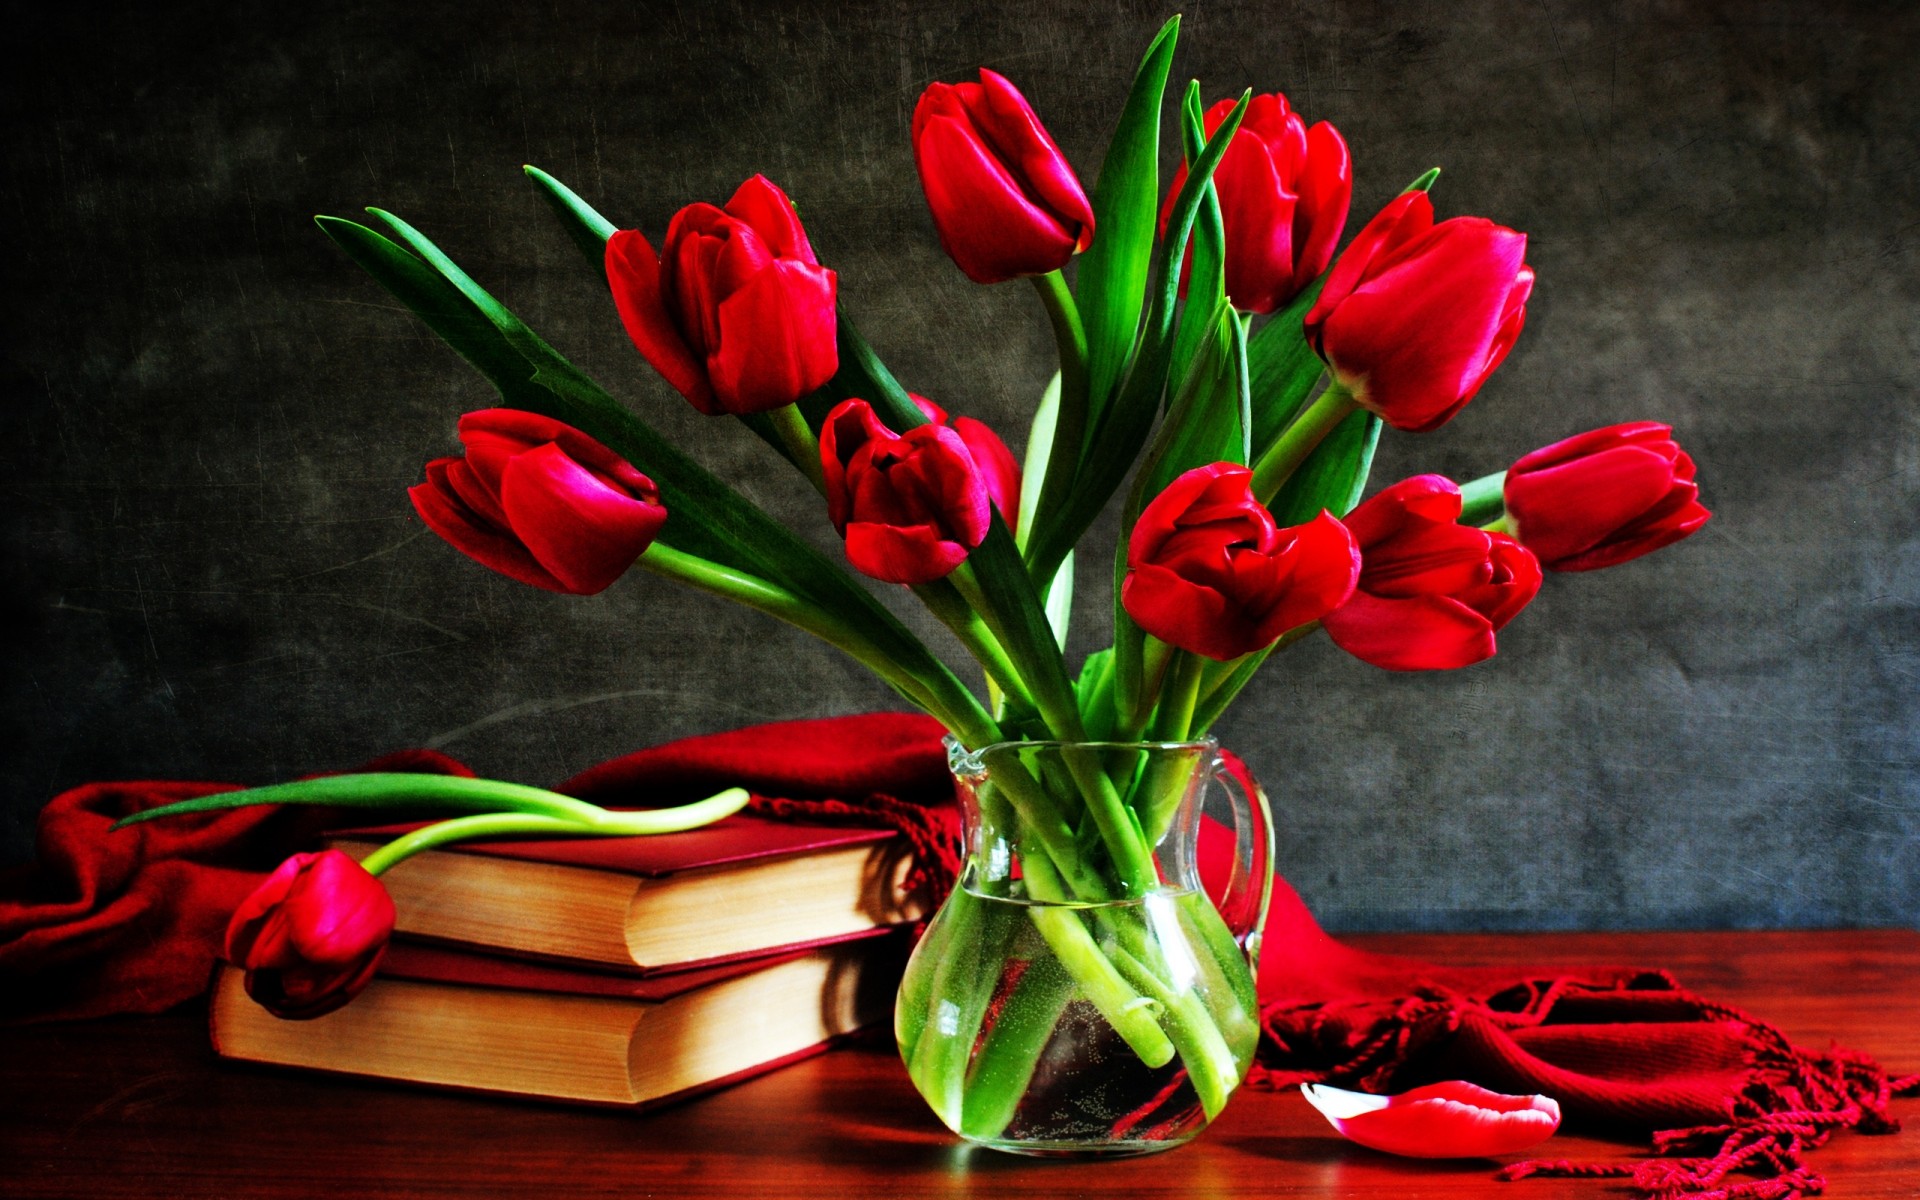 https://million-wallpapers.com/wallpapers/0/53/326358857129690/tulips-vase.jpg